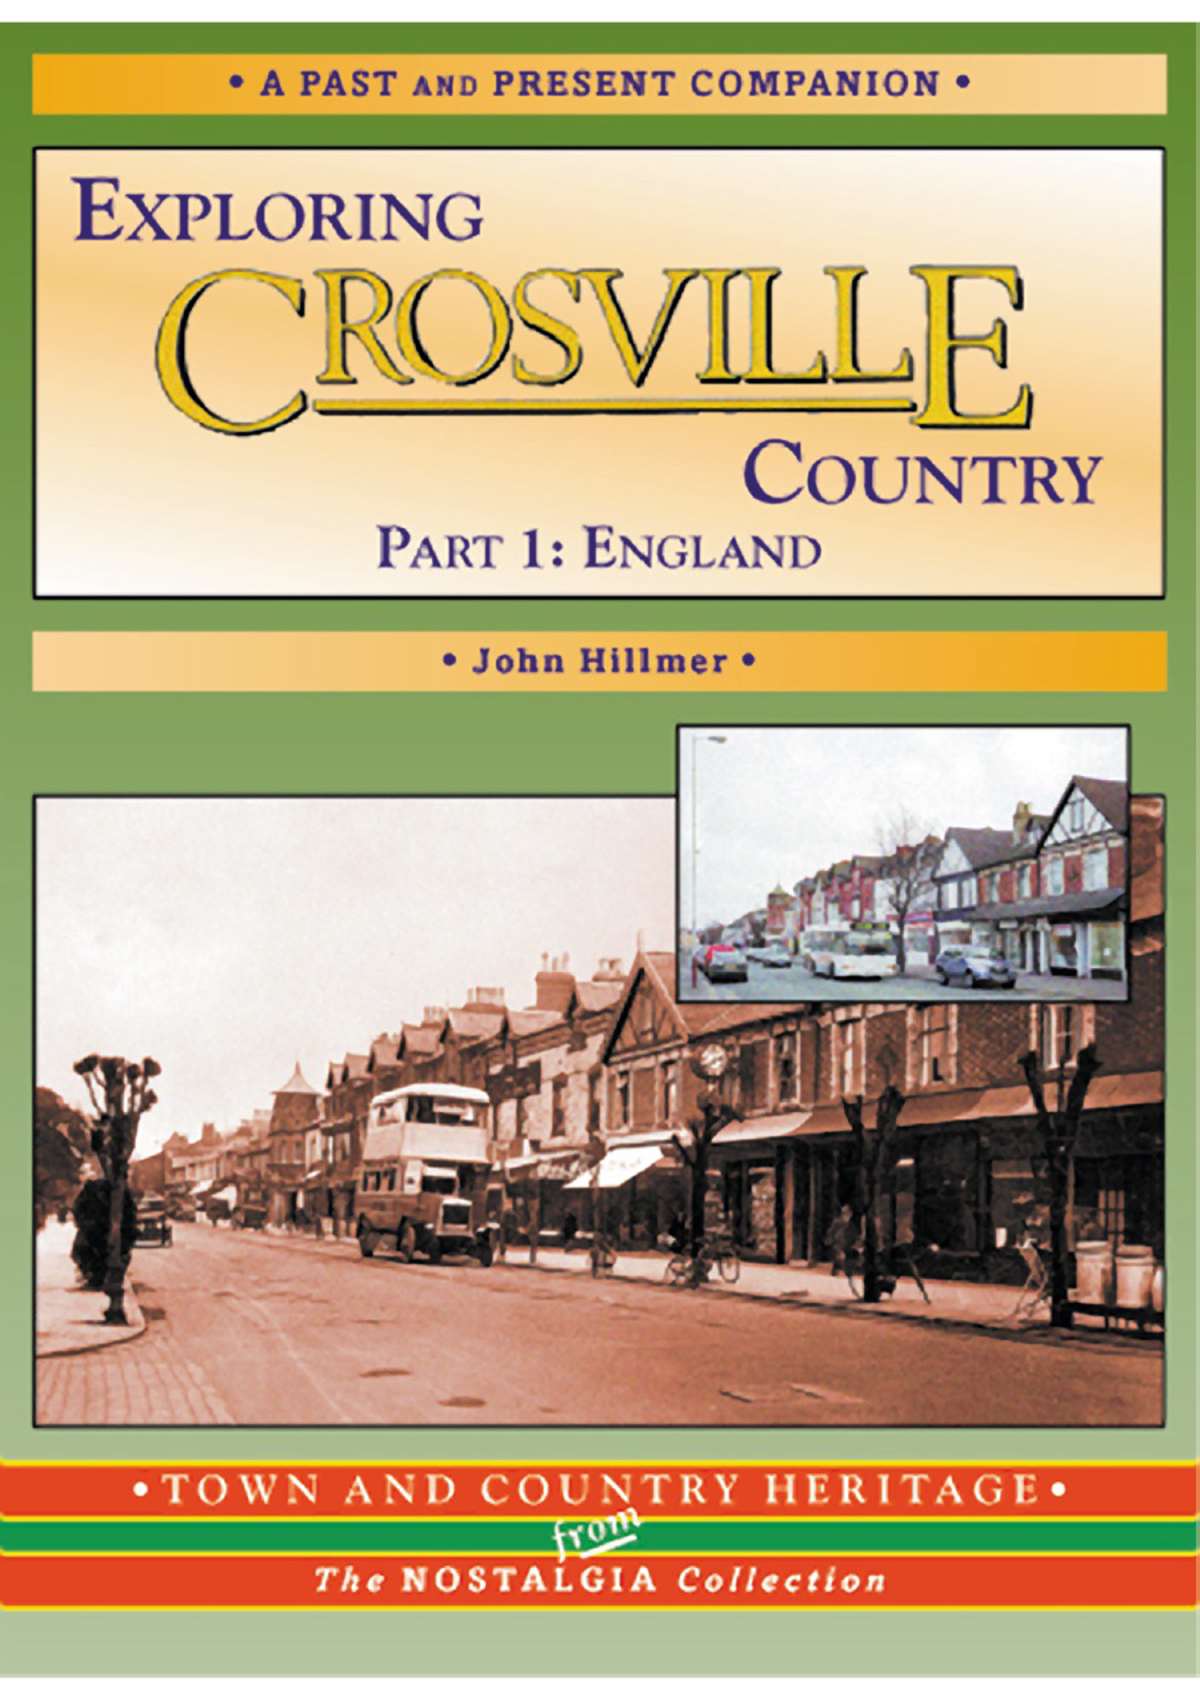 2484 - Exploring Crosville Country  Part 1: England